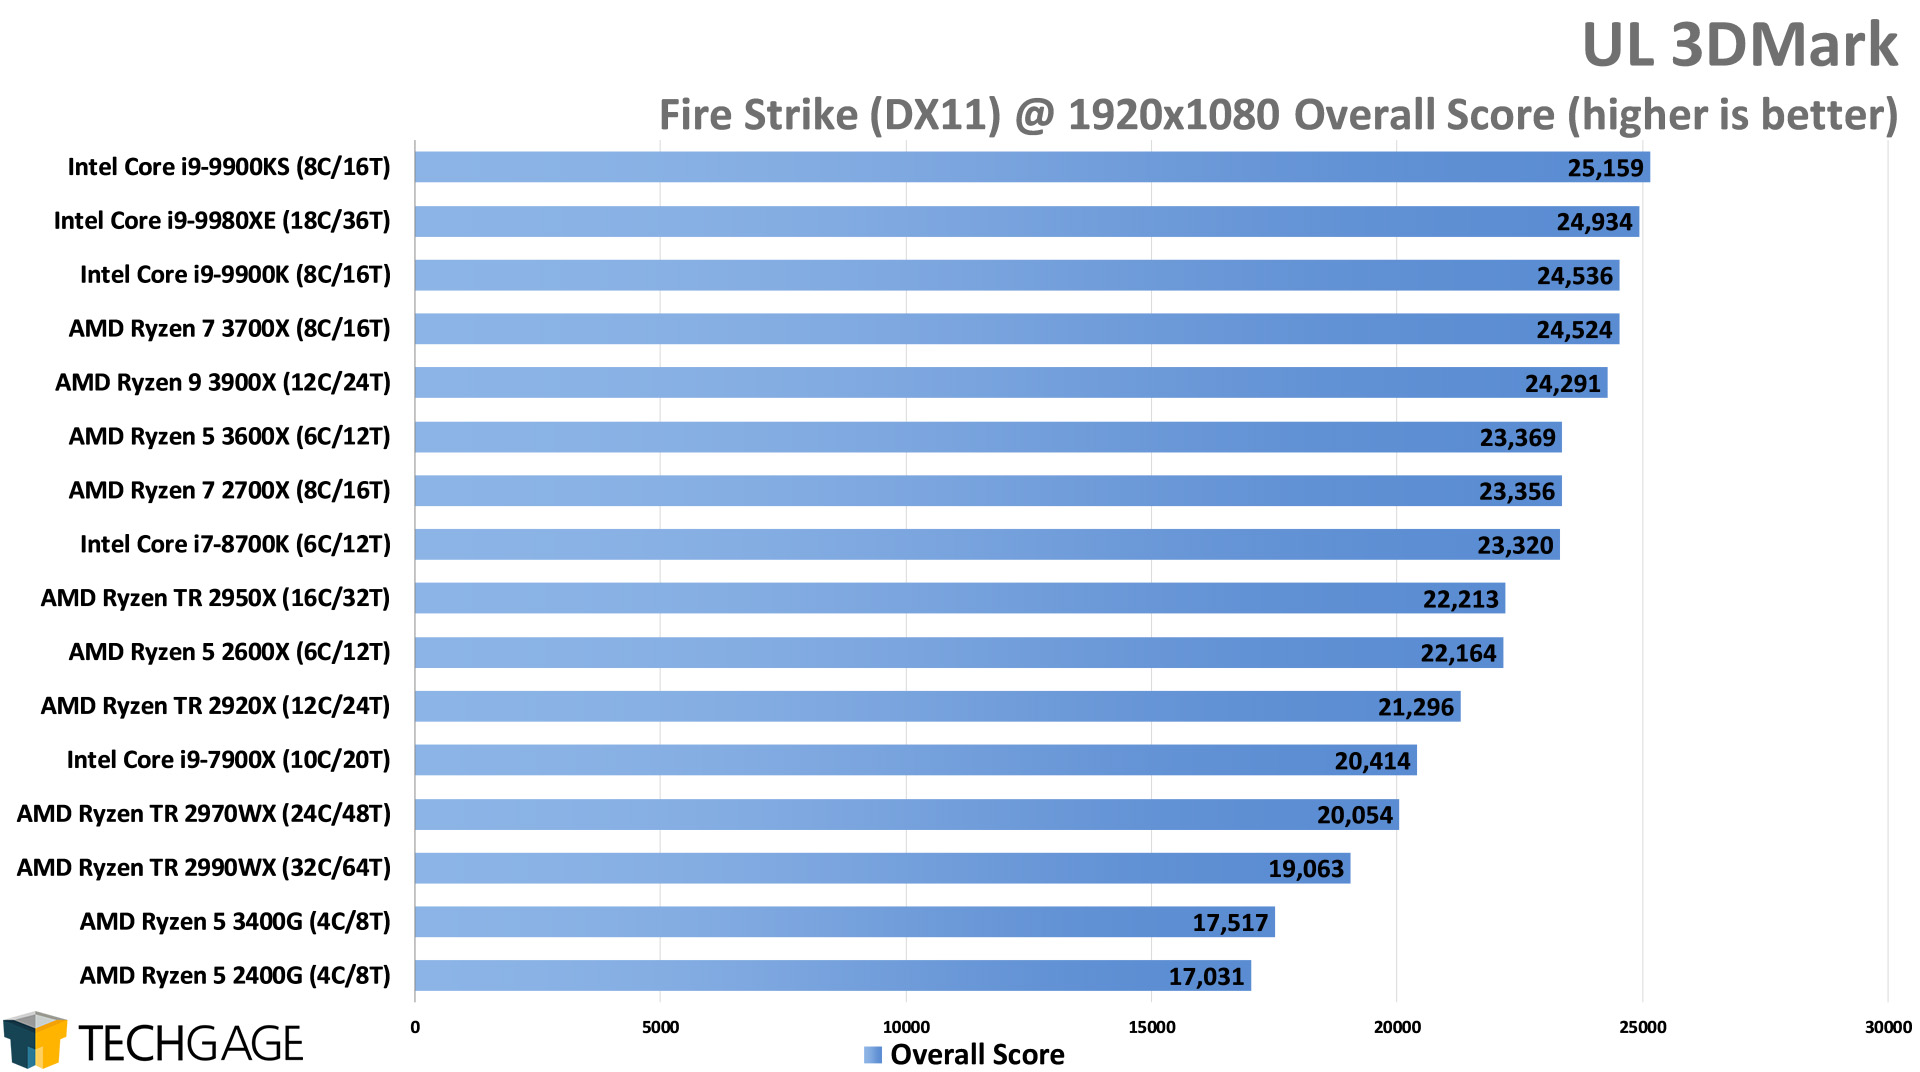 UL 3DMark - Fire Strike Overall Score (Intel Core i9-9900KS)